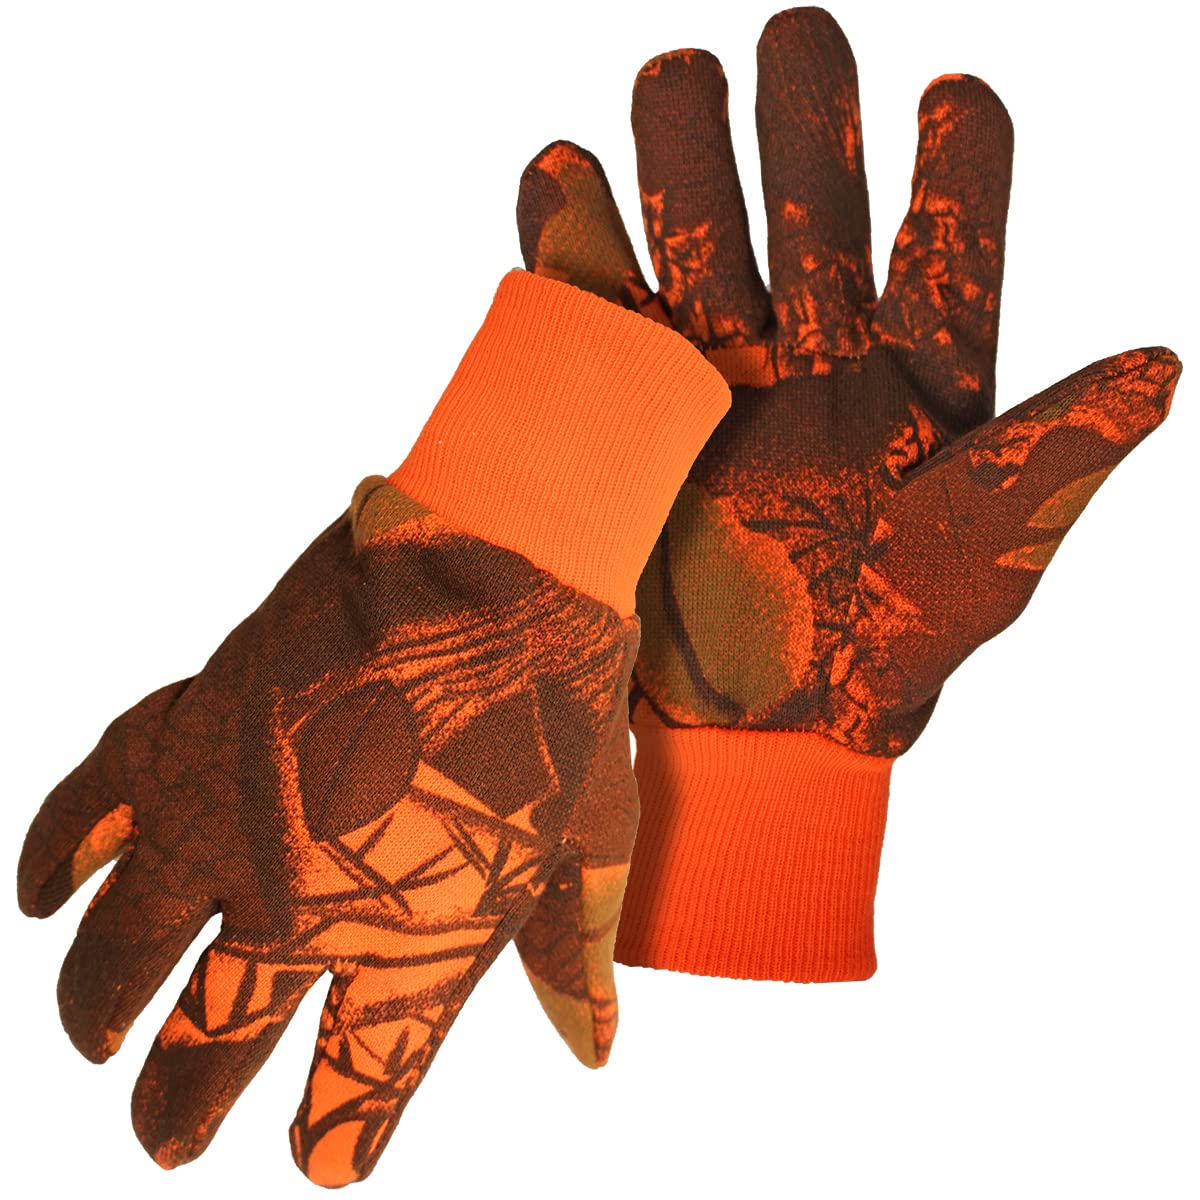 BOSS Men's Blaze Orange Camouflage Jersey Cotton Knit Wrist work Gloves, Durable, Clute Cut Design, Extreme Comfort, Large, (4101AL)